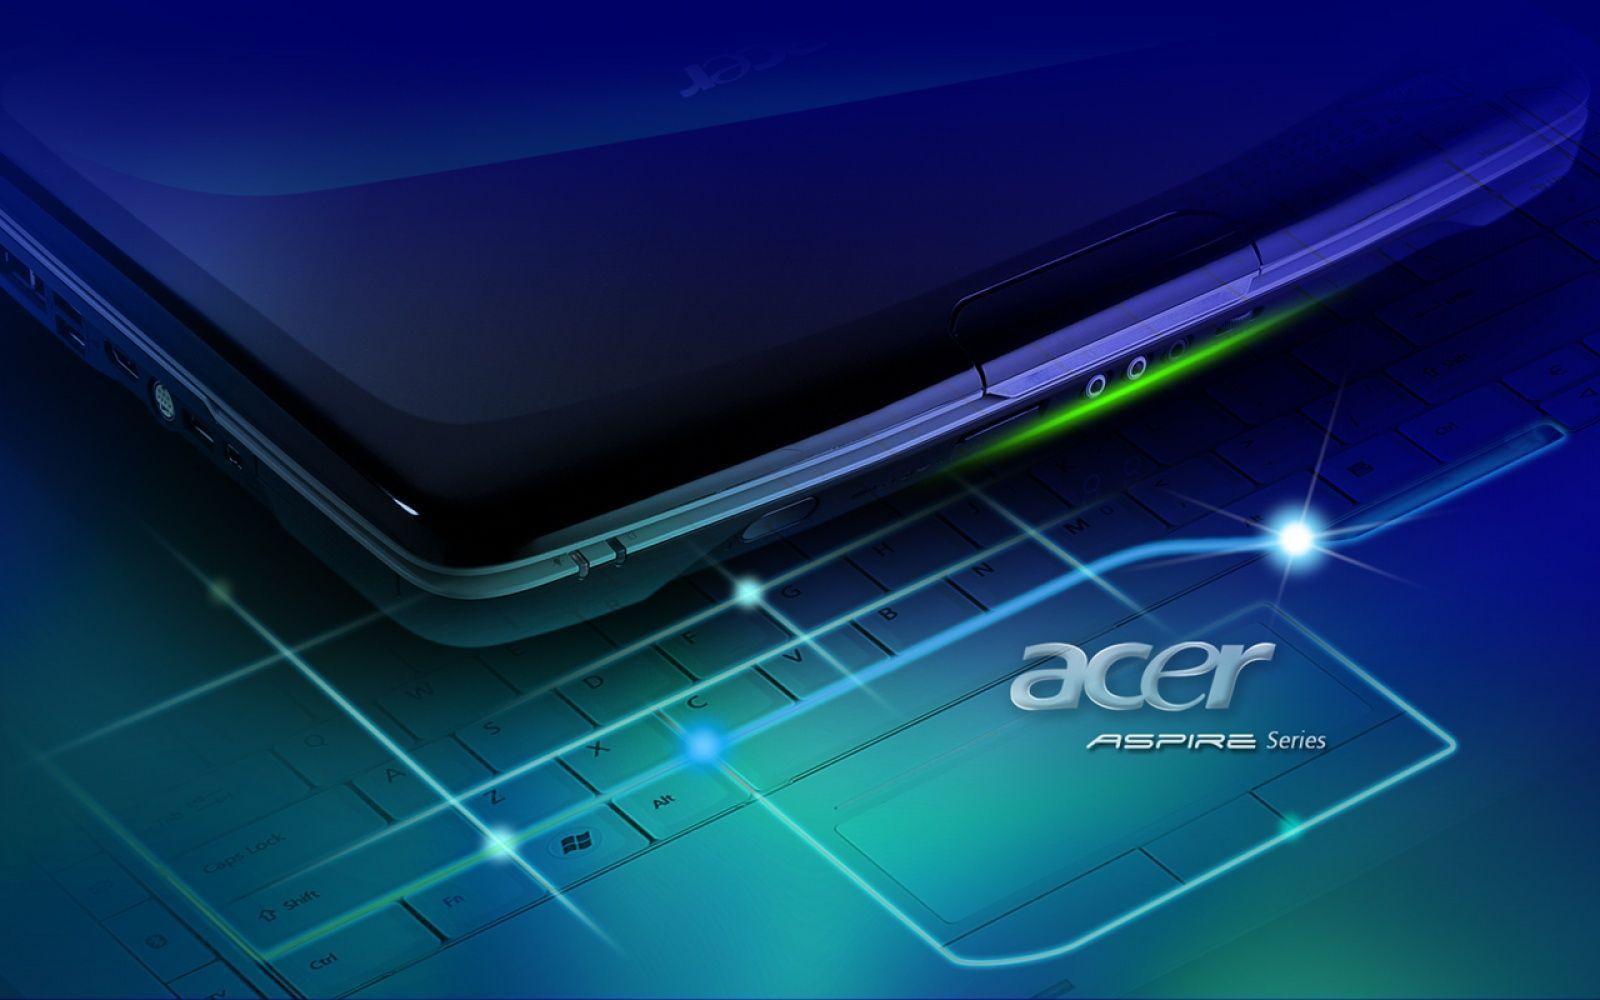 Stunning Acer Desktop Wallpaper